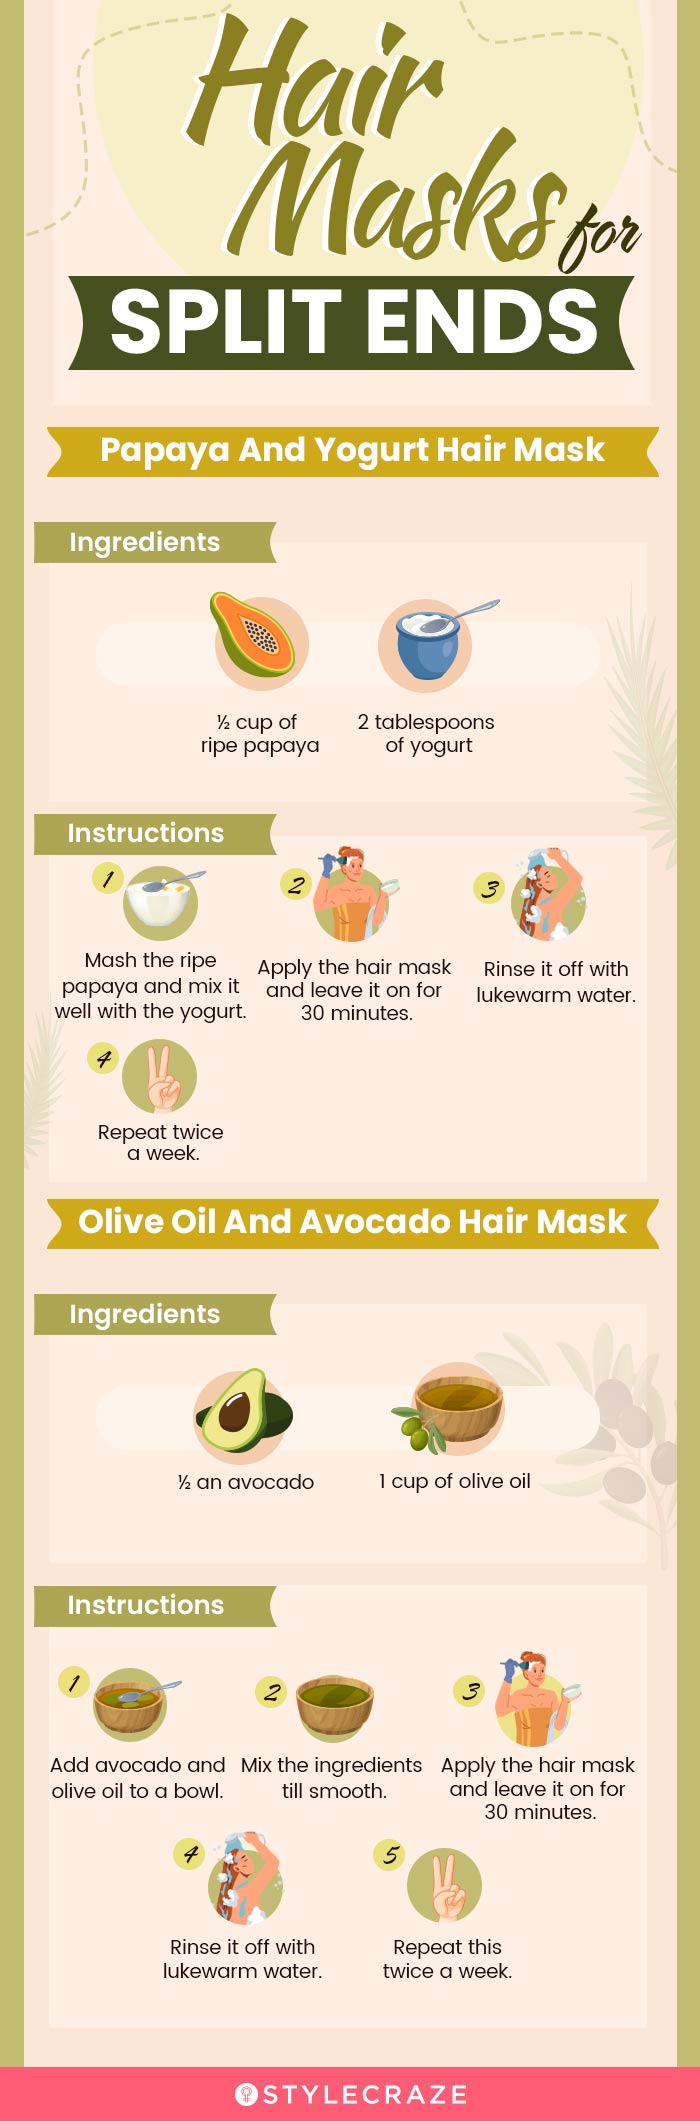 hair masks for split ends [infographic]